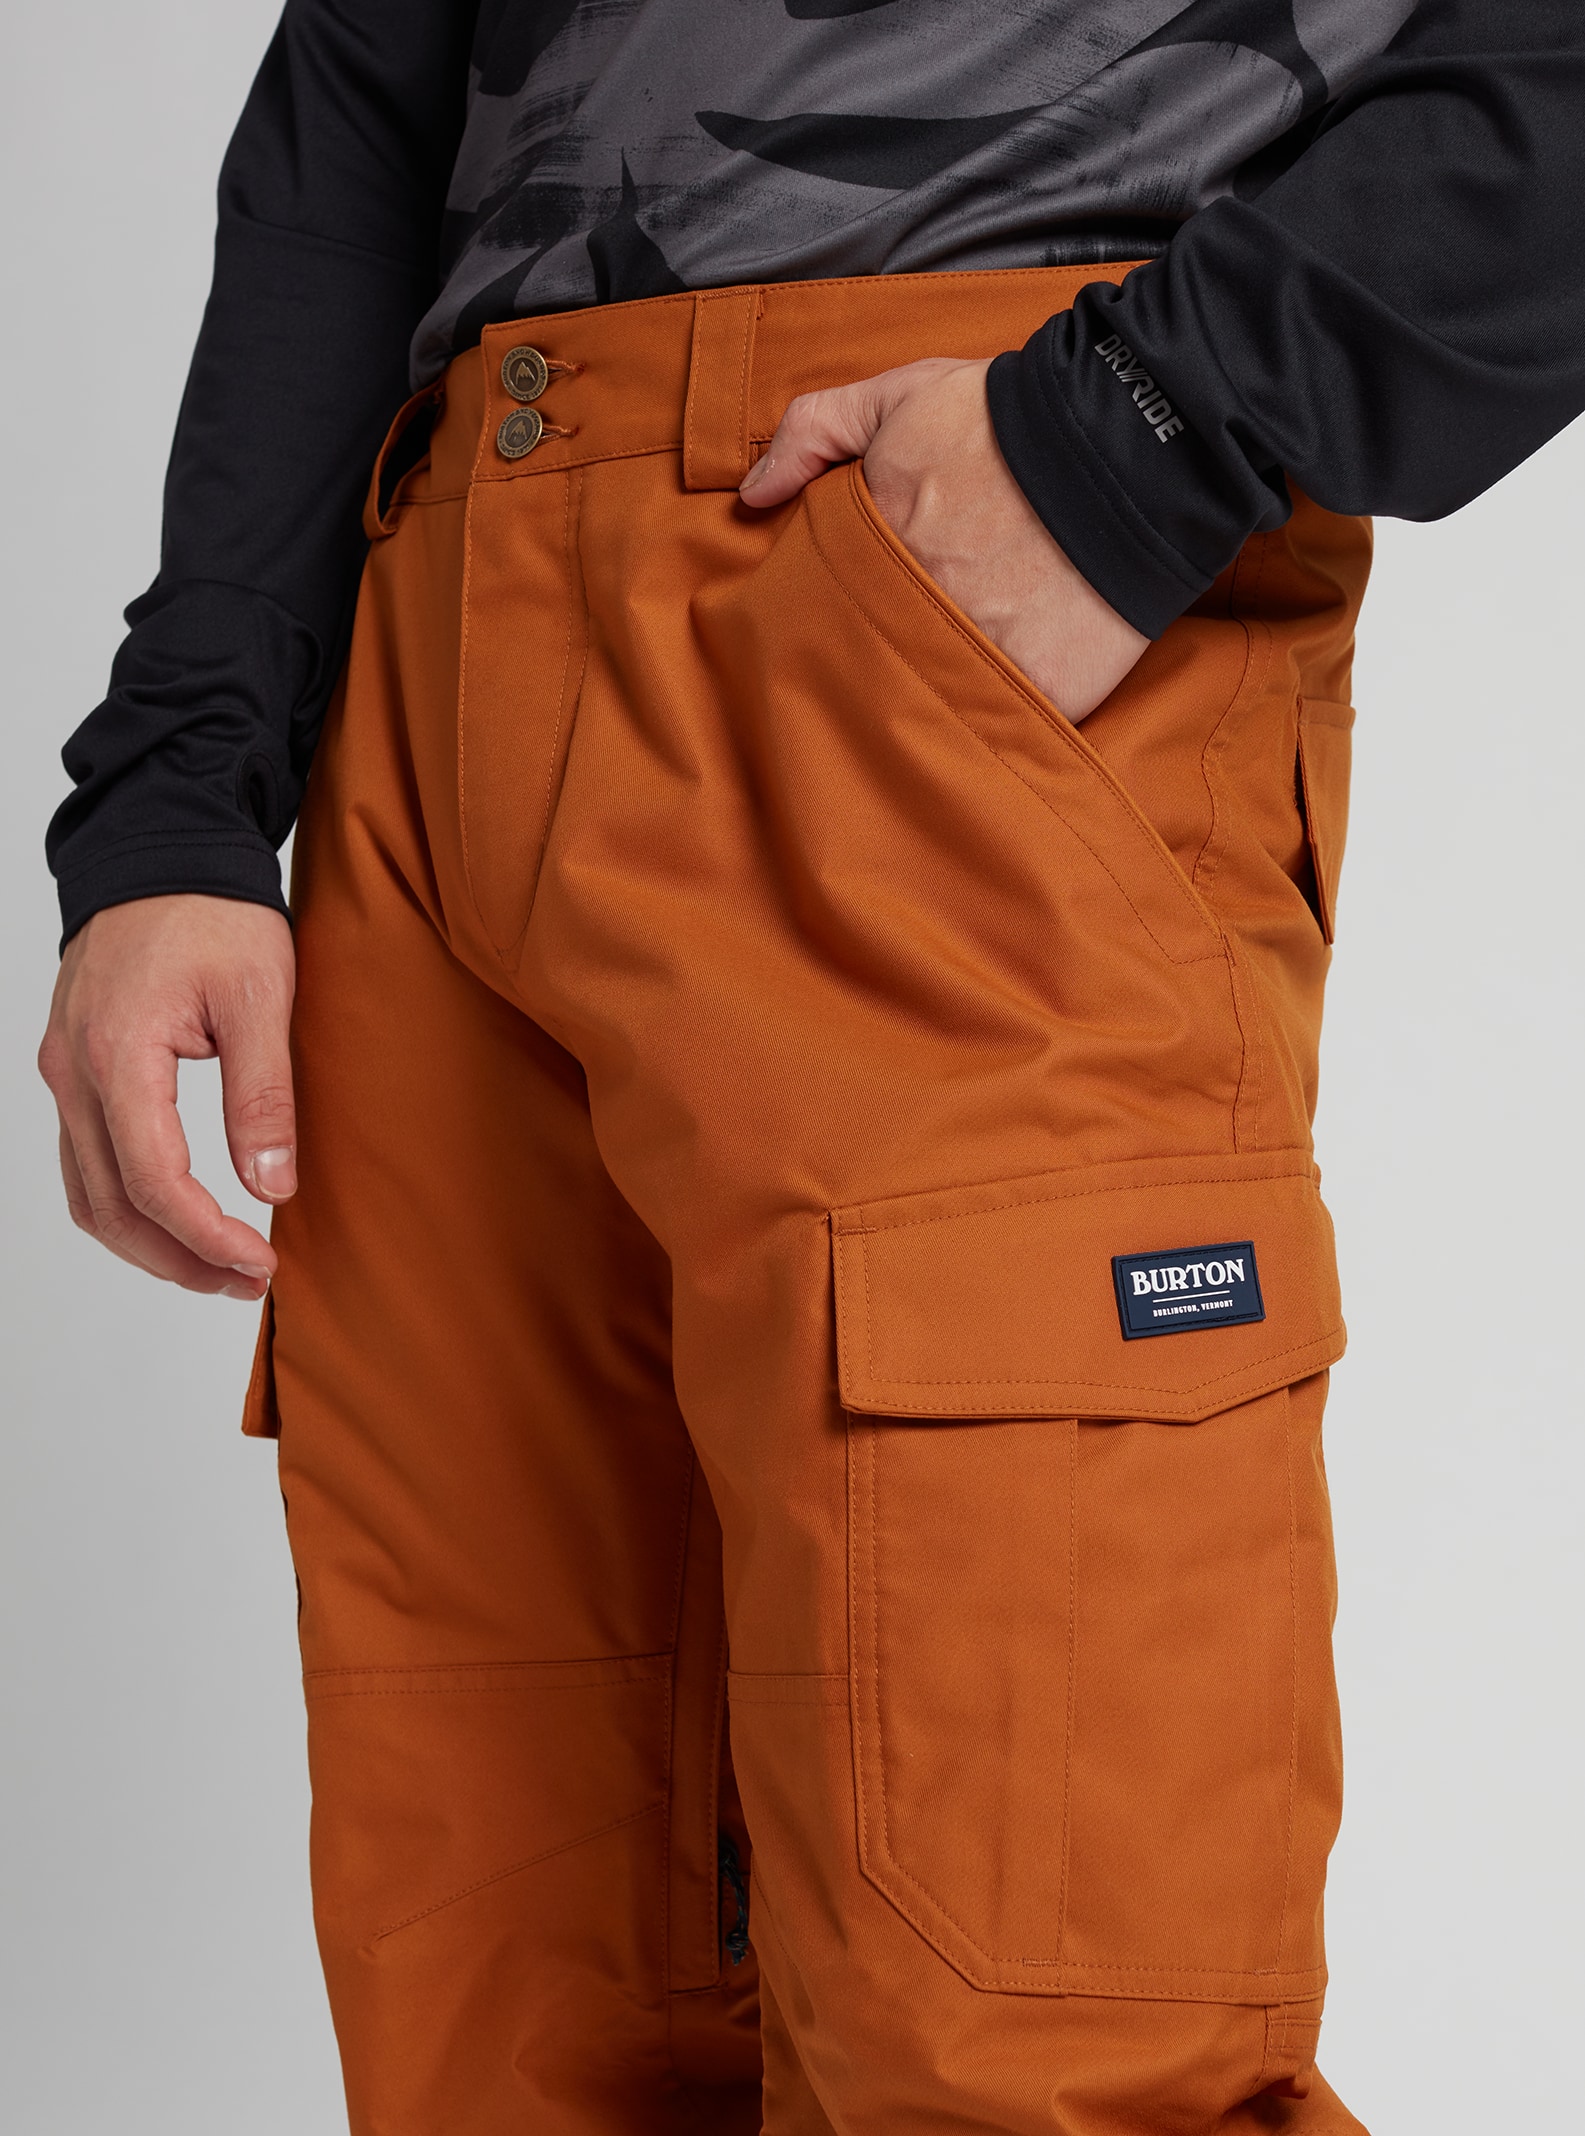 Men's Burton Cargo Pant - Short | Burton.com Winter 2021 US